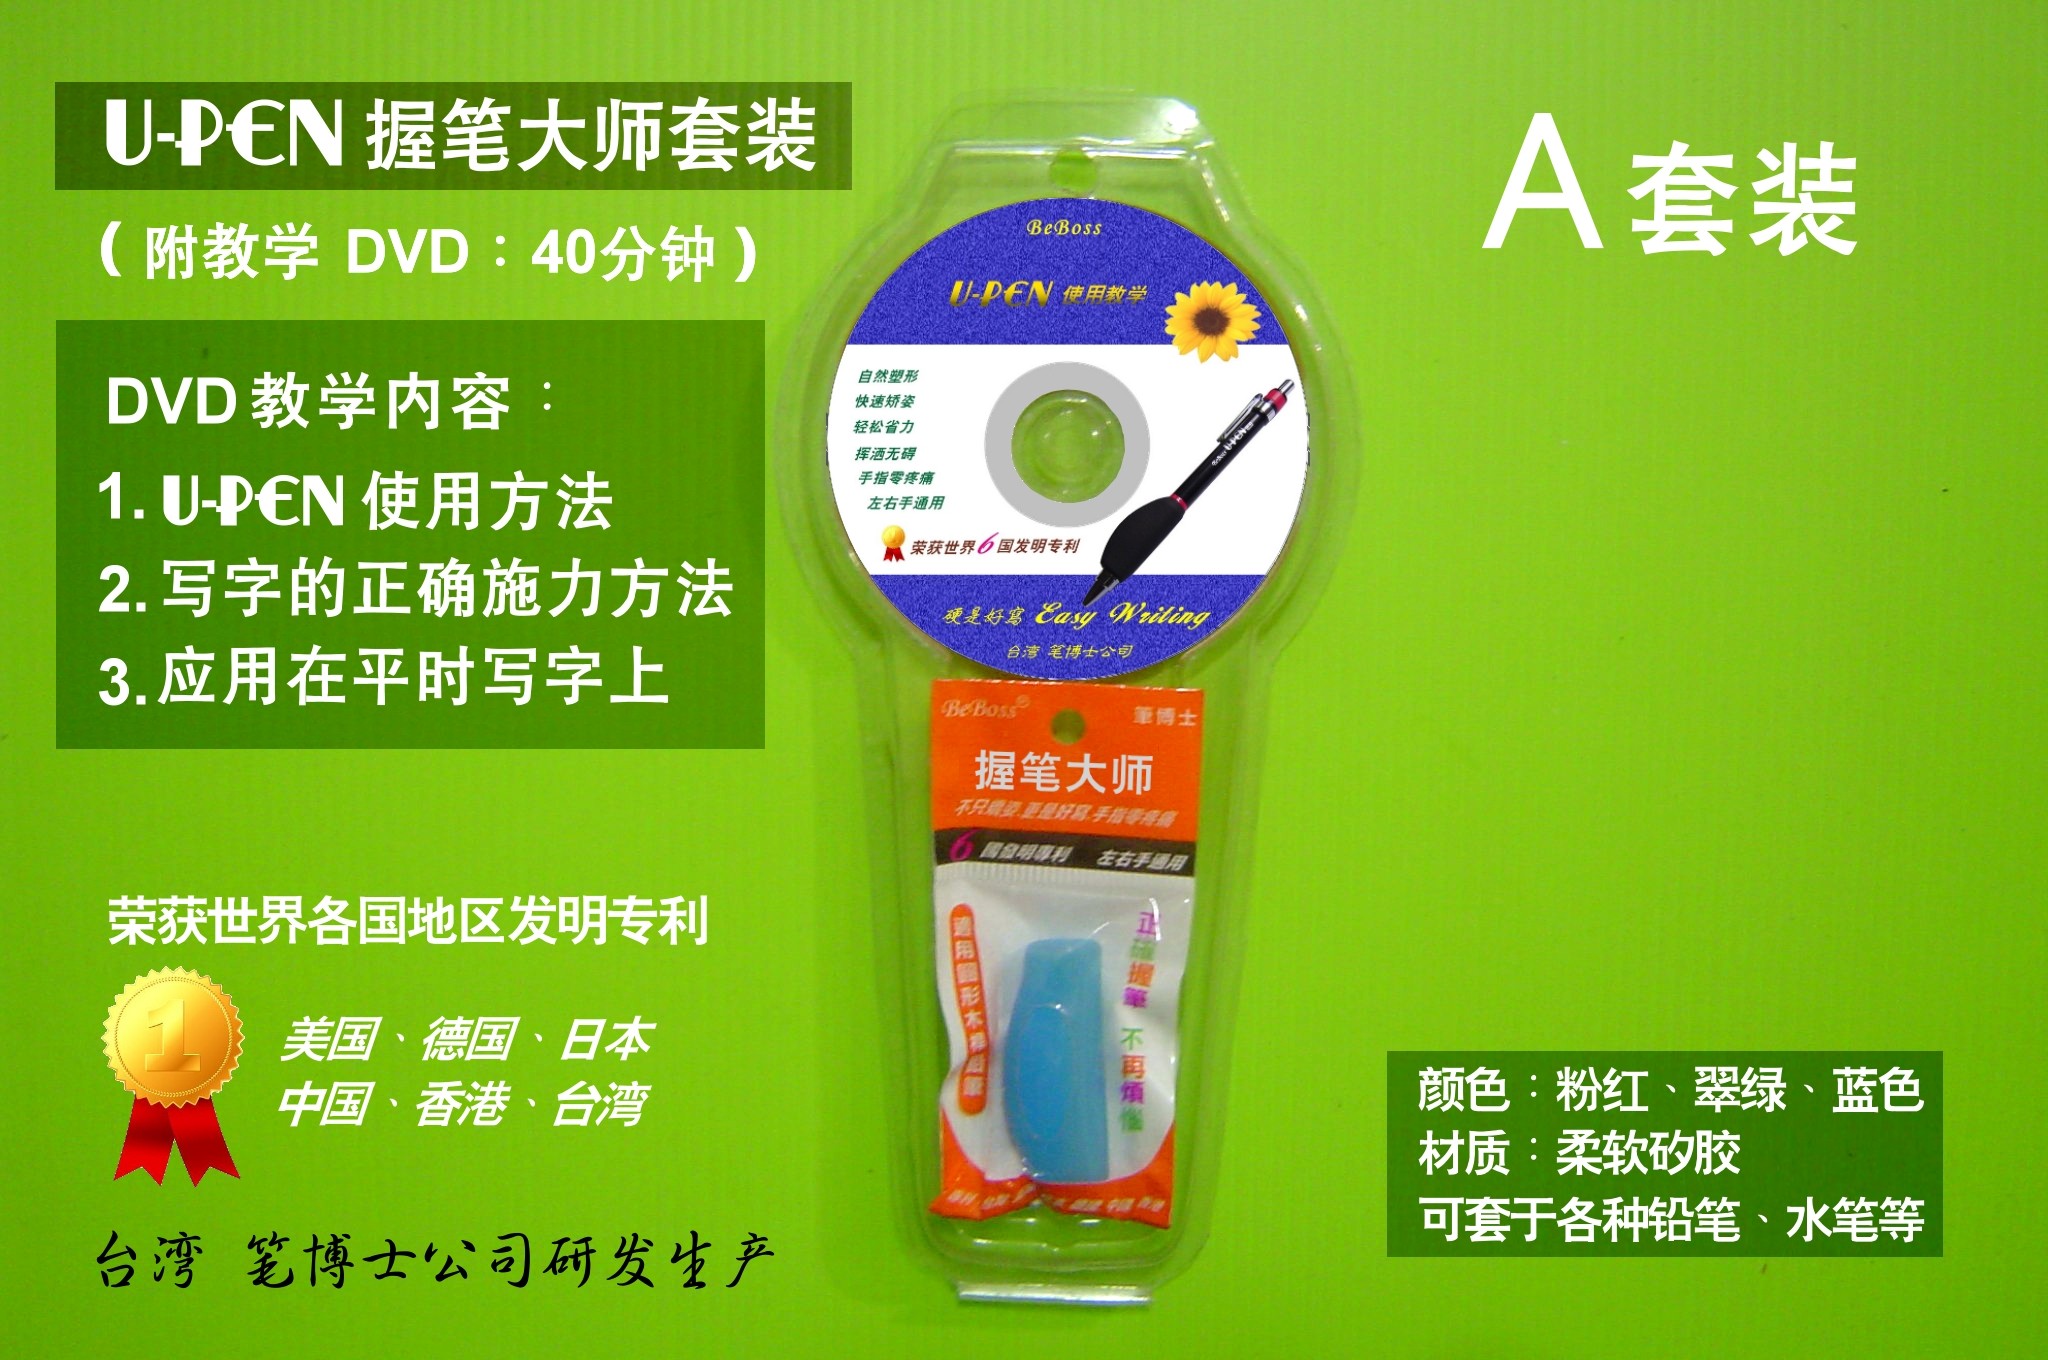 A Package - Pen Grip + DVD